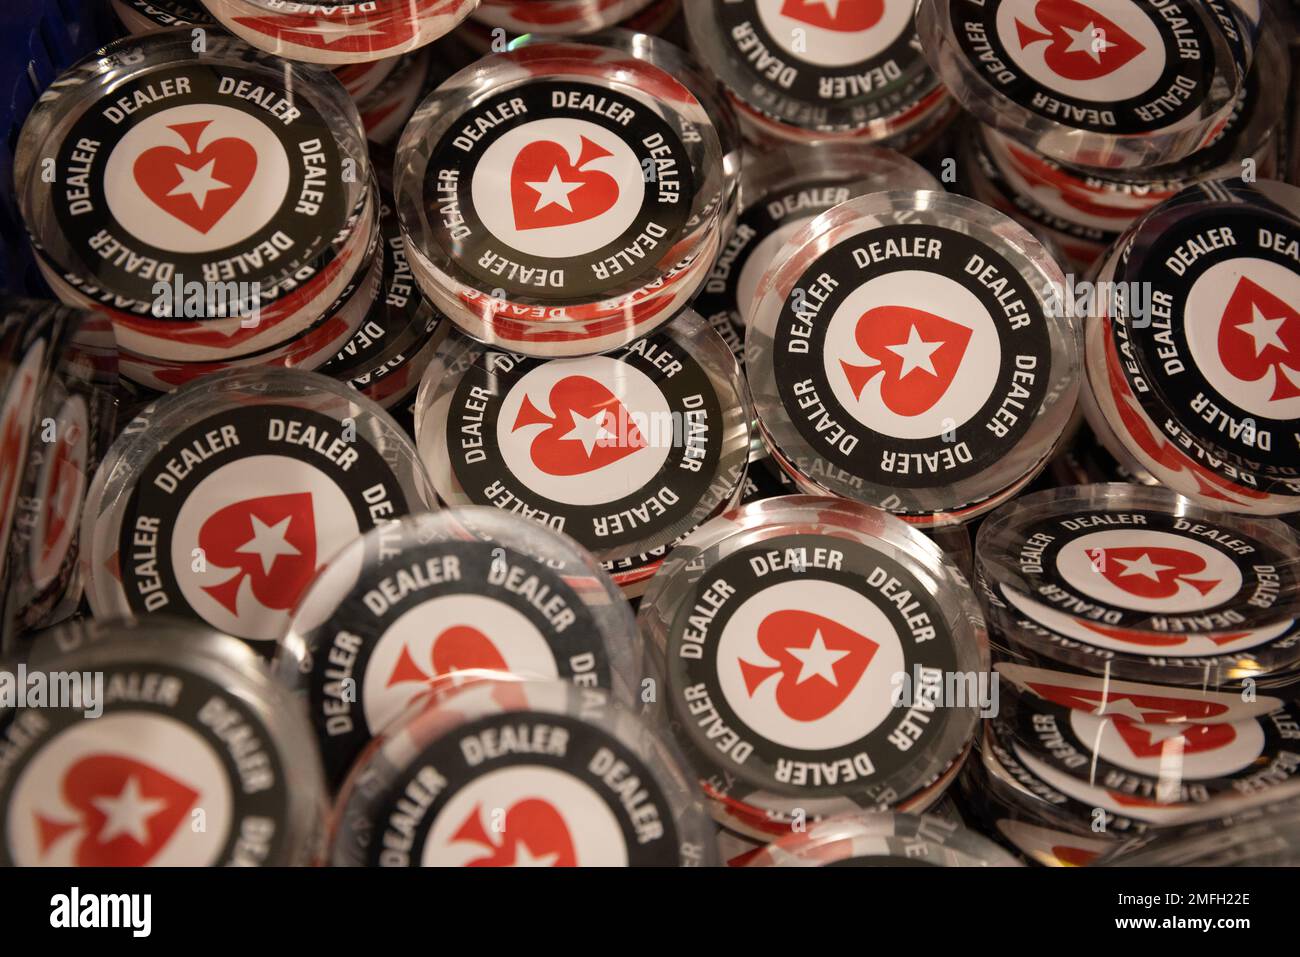 Acrílico Poker Dealer Button Texas Hold'em 3inch Pulsando las tarjetas de póquer Guardia Poker Dealer Button Foto de stock